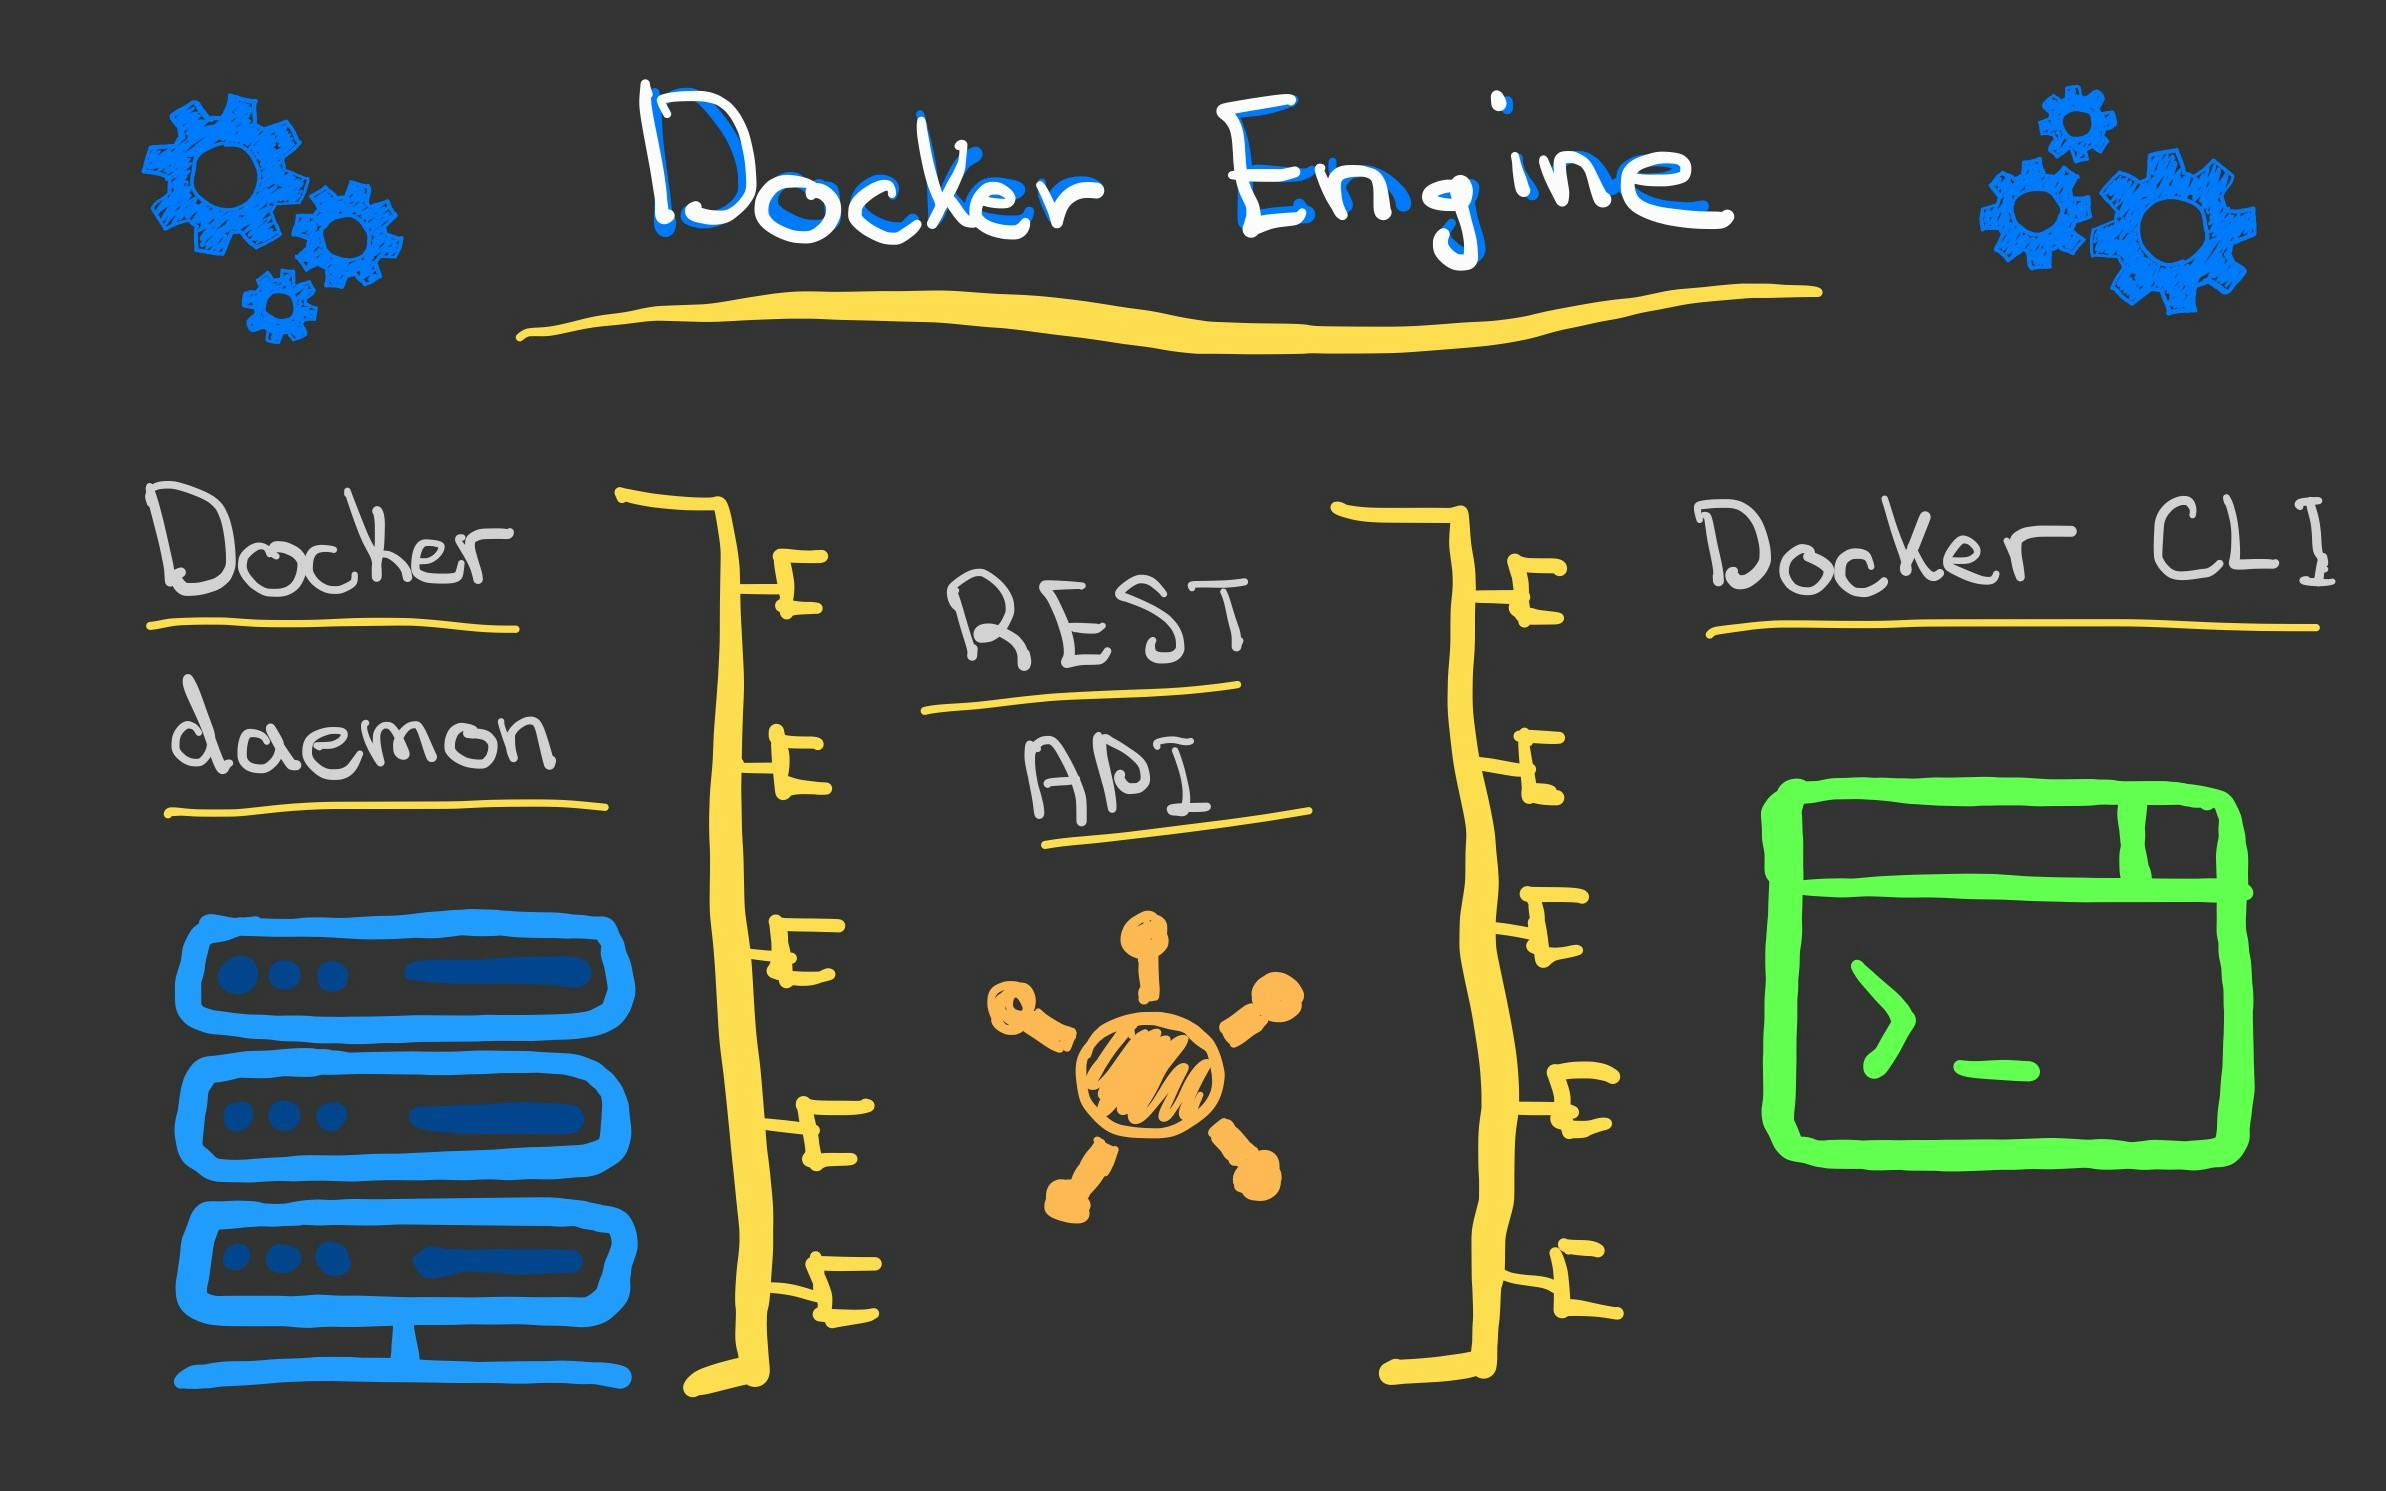 Docker engine